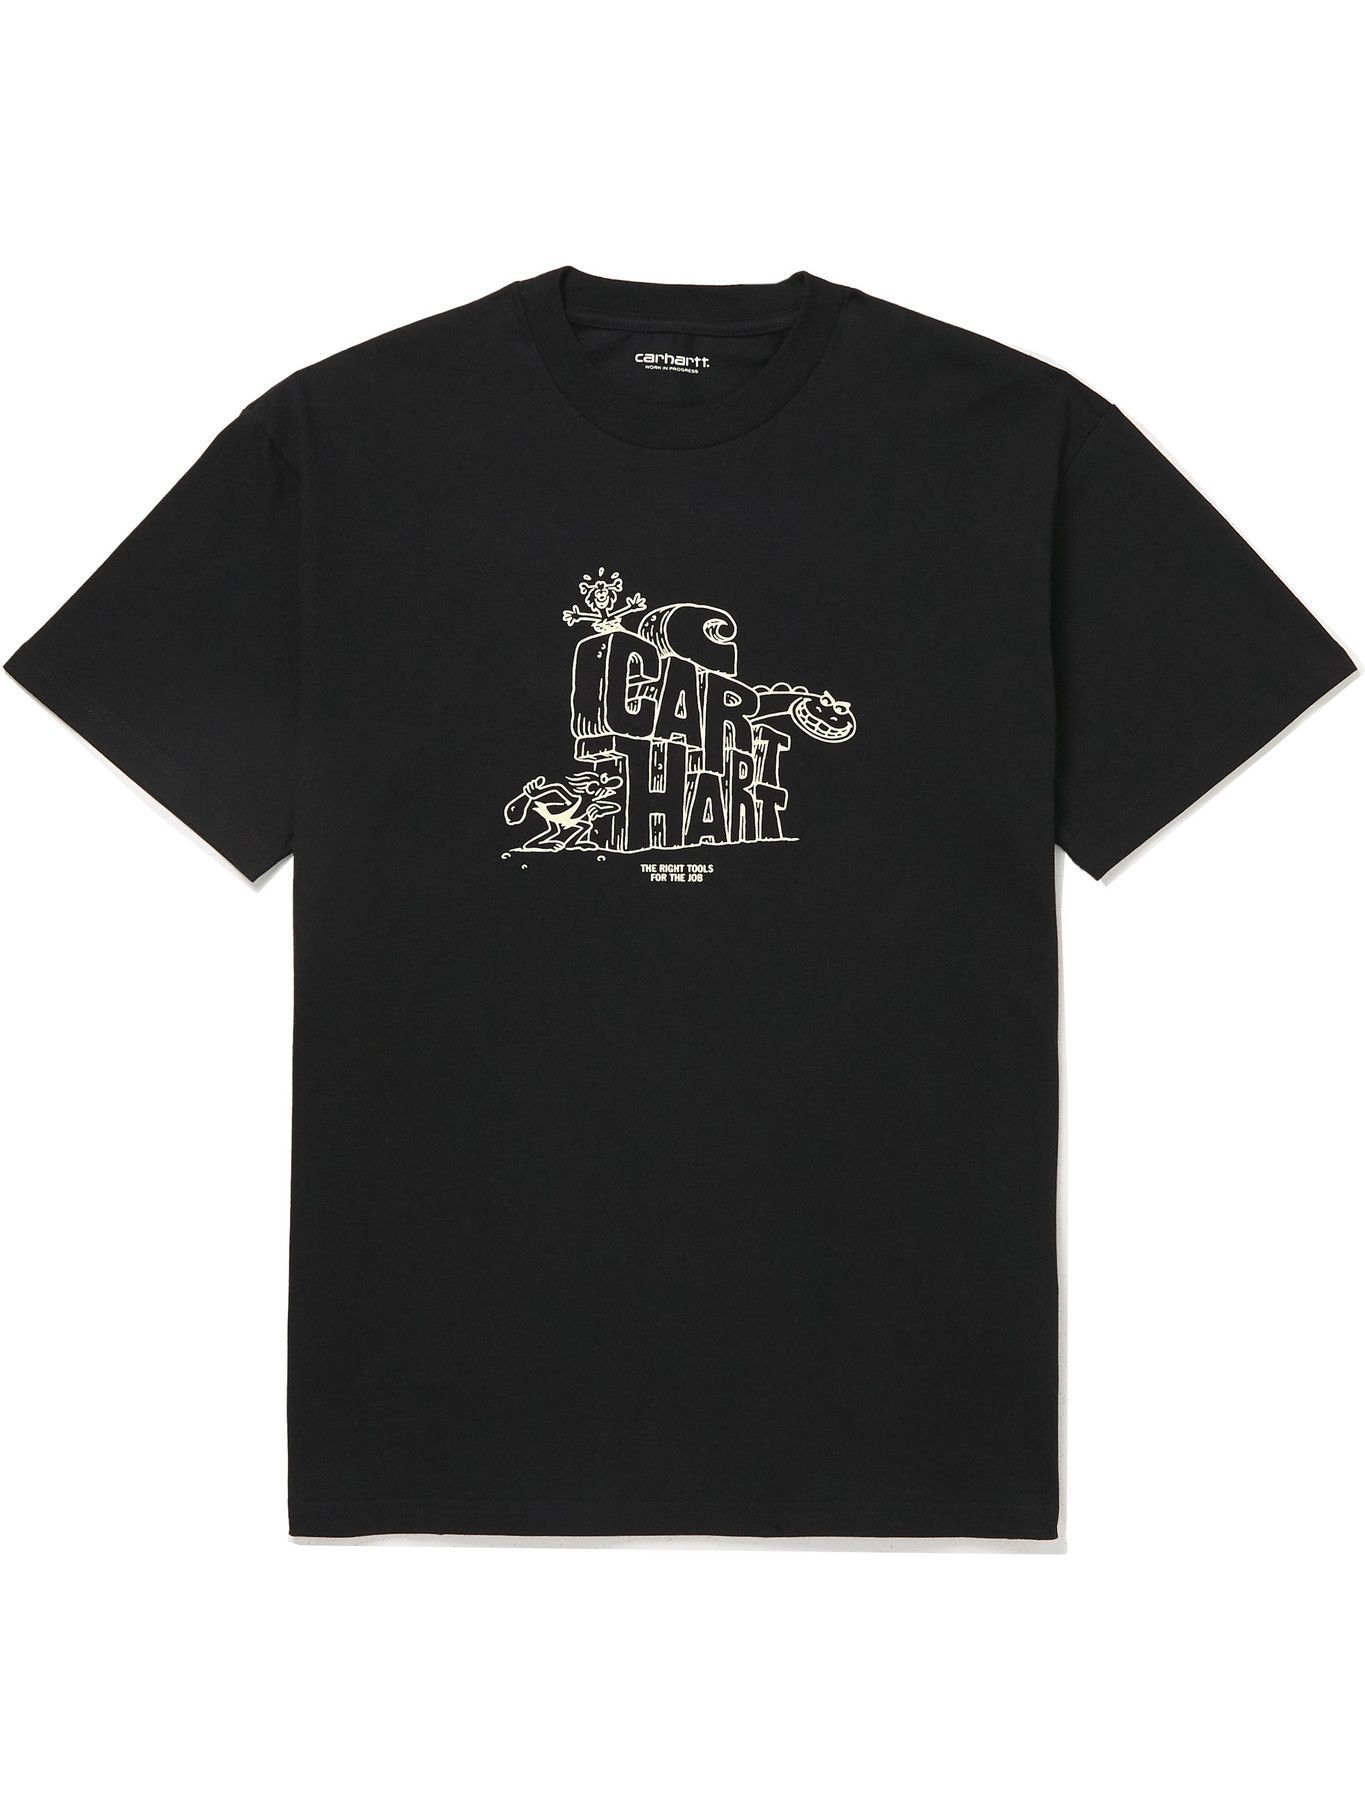 Carhartt WIP - Stone Age Logo-Print Cotton-Jersey T-Shirt - Black 